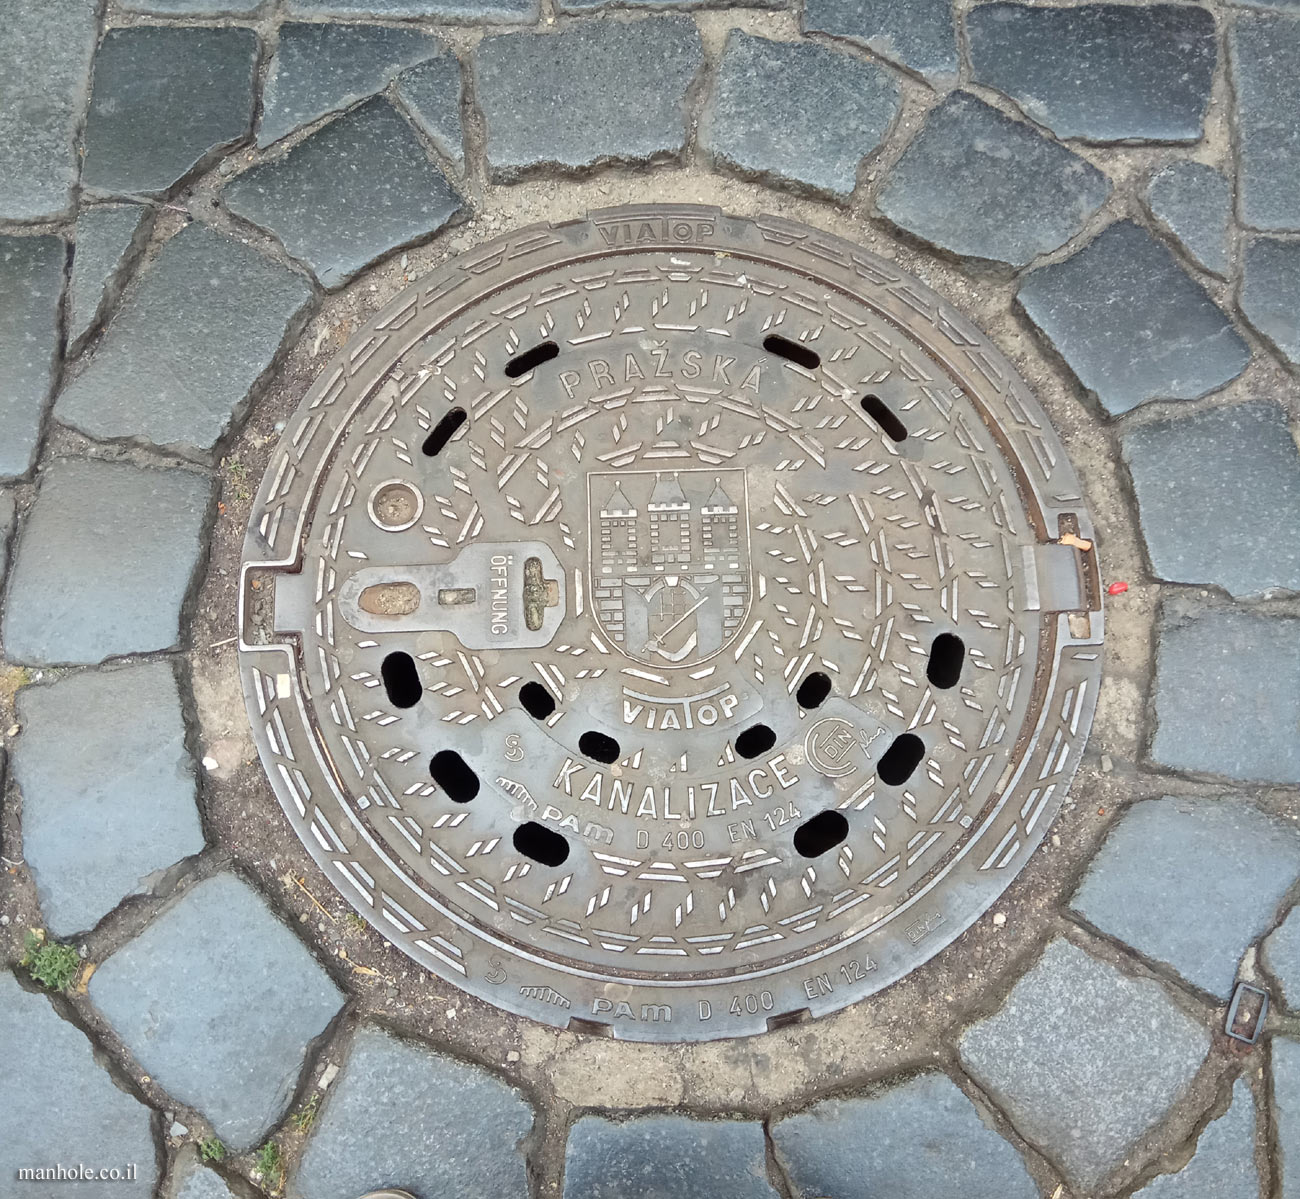 Prague - Sewage - VIATOP